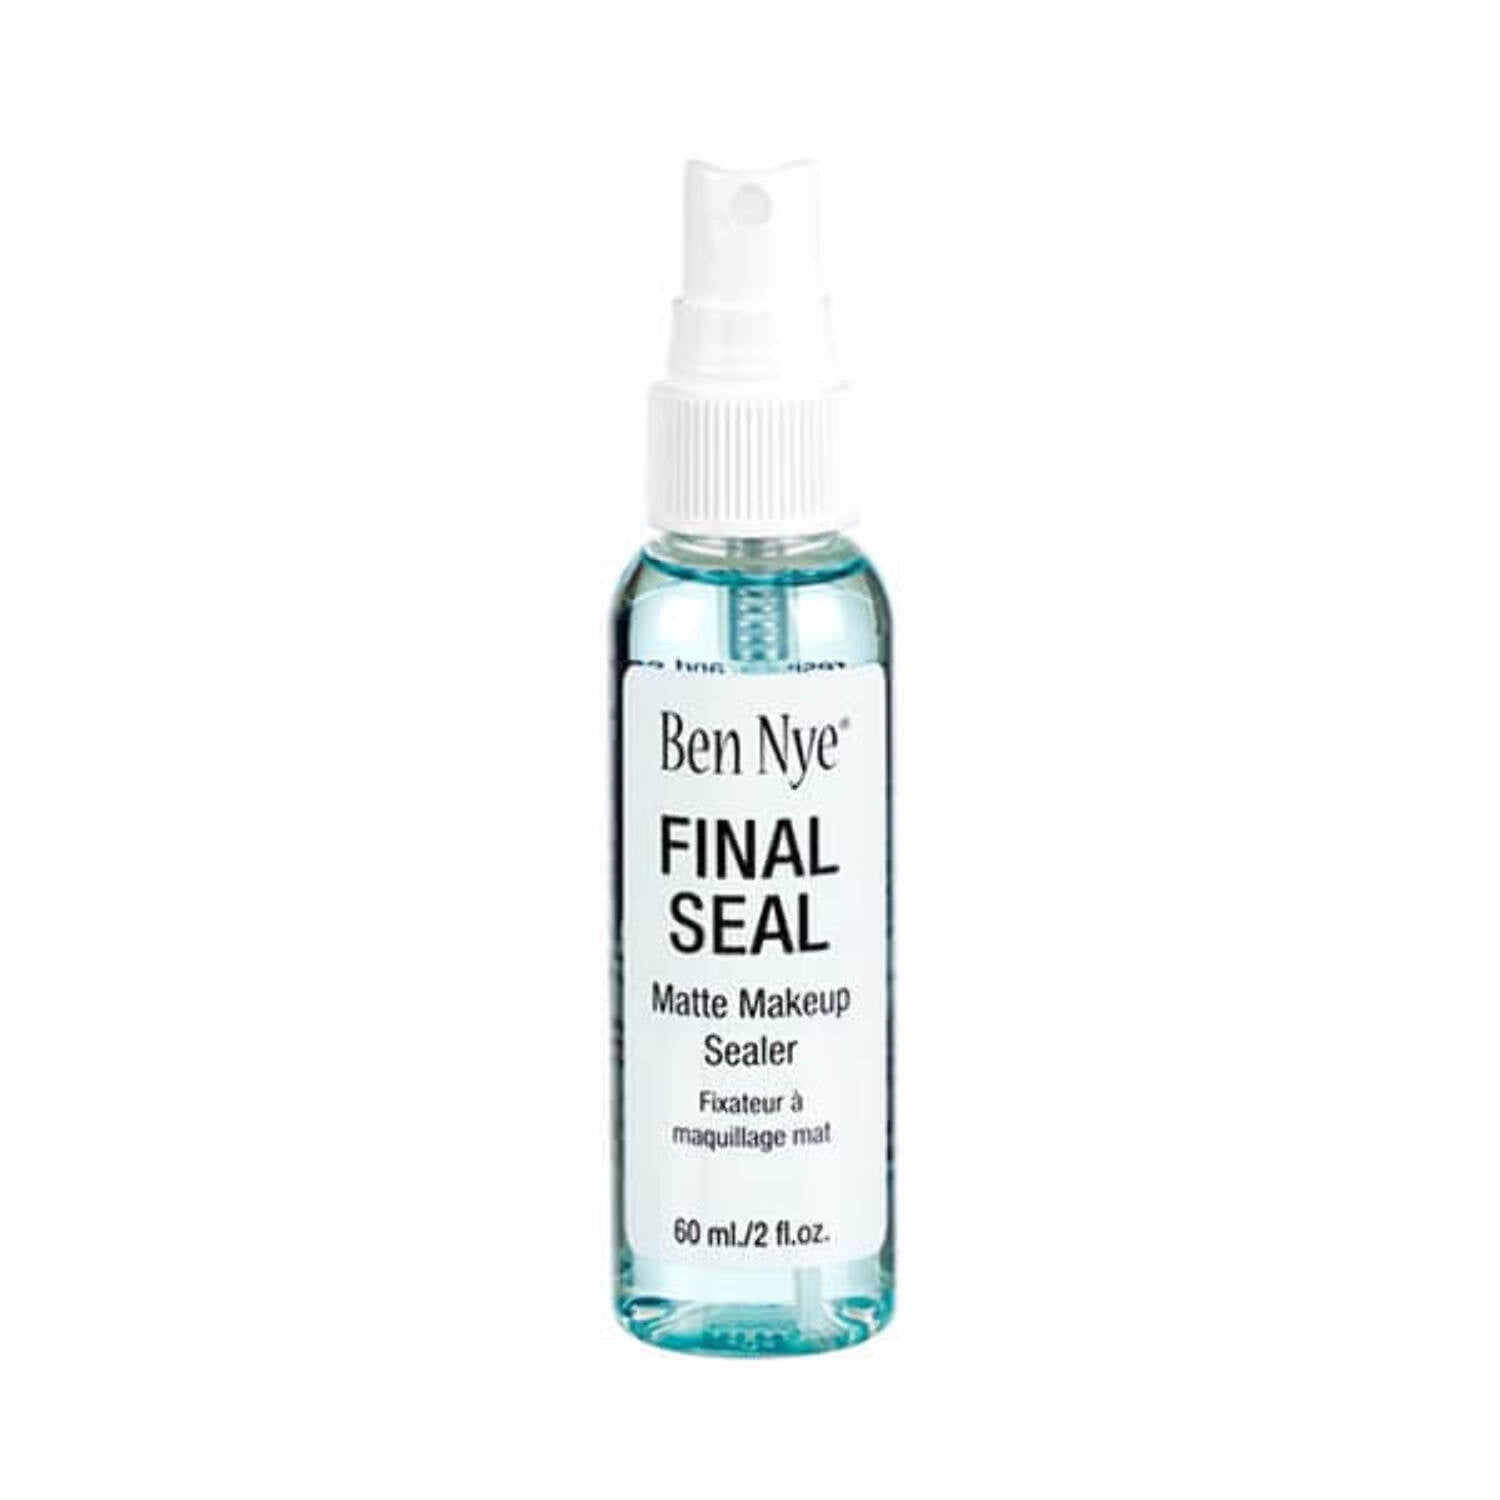 ORIGINAL MAKEUP STORE IN KENYA on Instagram: 🌼 MUST HAVE! Ben Nye Final  Seal Matte Makeup Sealer AVAILABLE INSTOCK 120ML KSH 4200 60ML KSH 2850 💦  A Makeup setting spray that completes